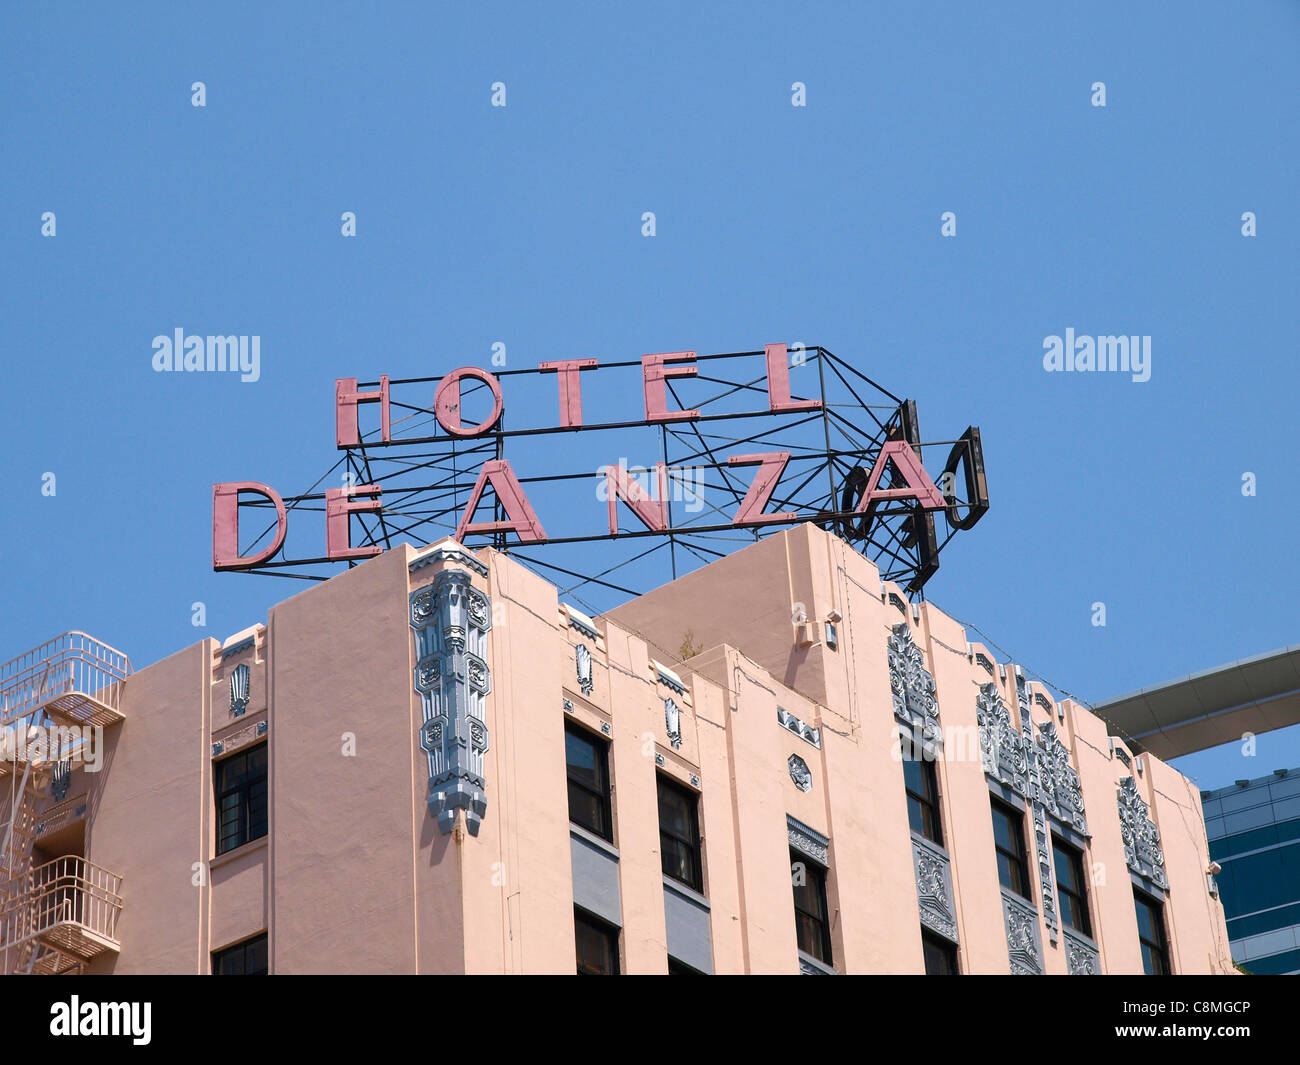 The Hotel De Anza historic hotel in San Jose, California, incorporating Art Deco, Mission and Spanish Revival architectural styles. Stock Photo